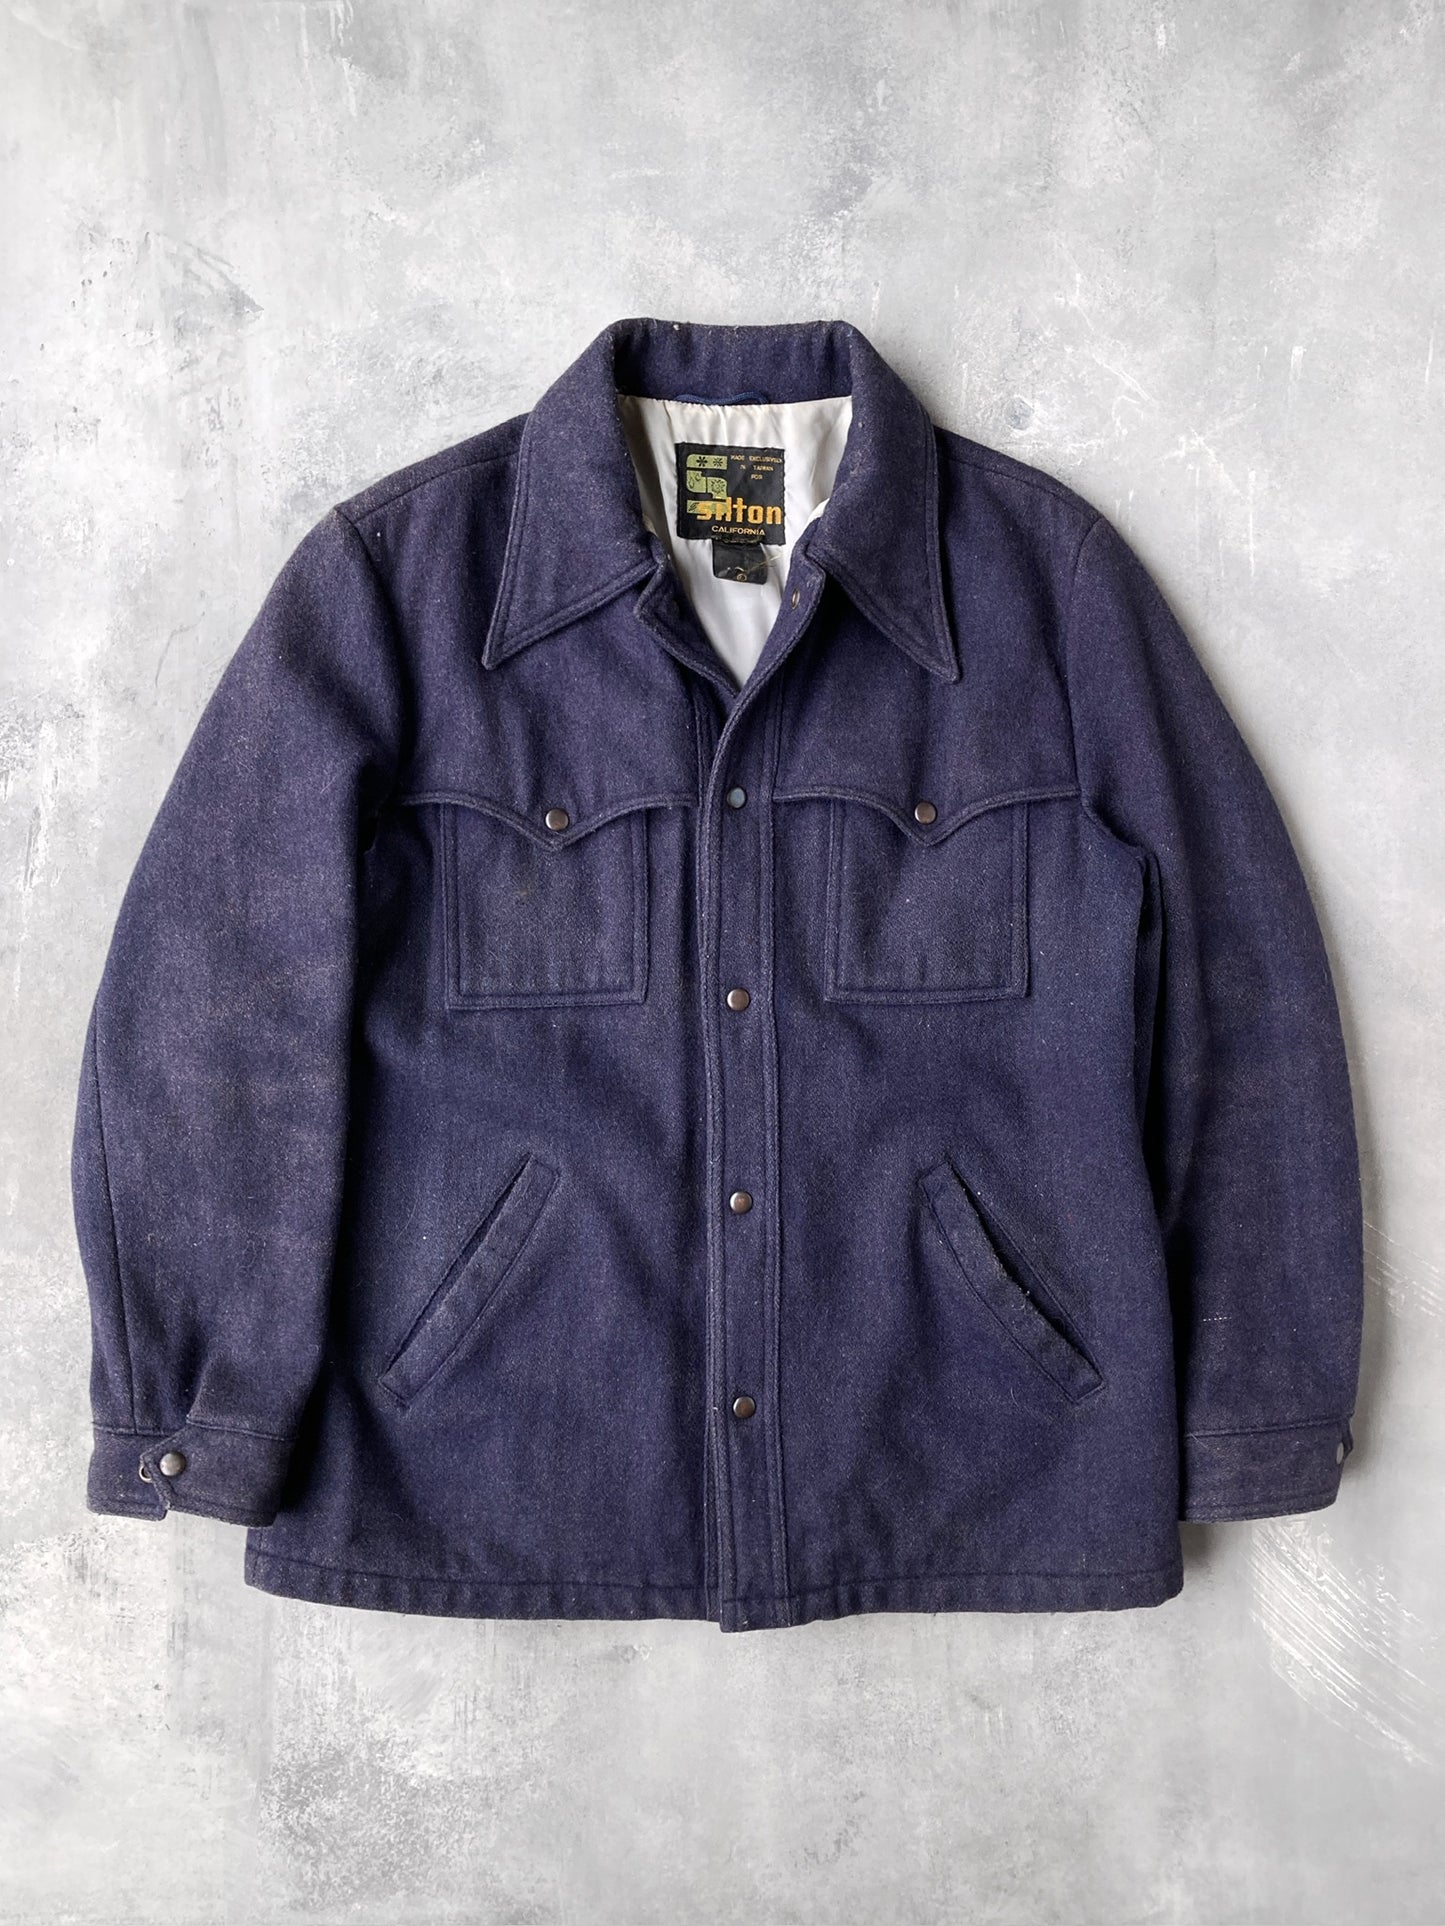 Wool Shirt Jacket 80's - Medium / Large